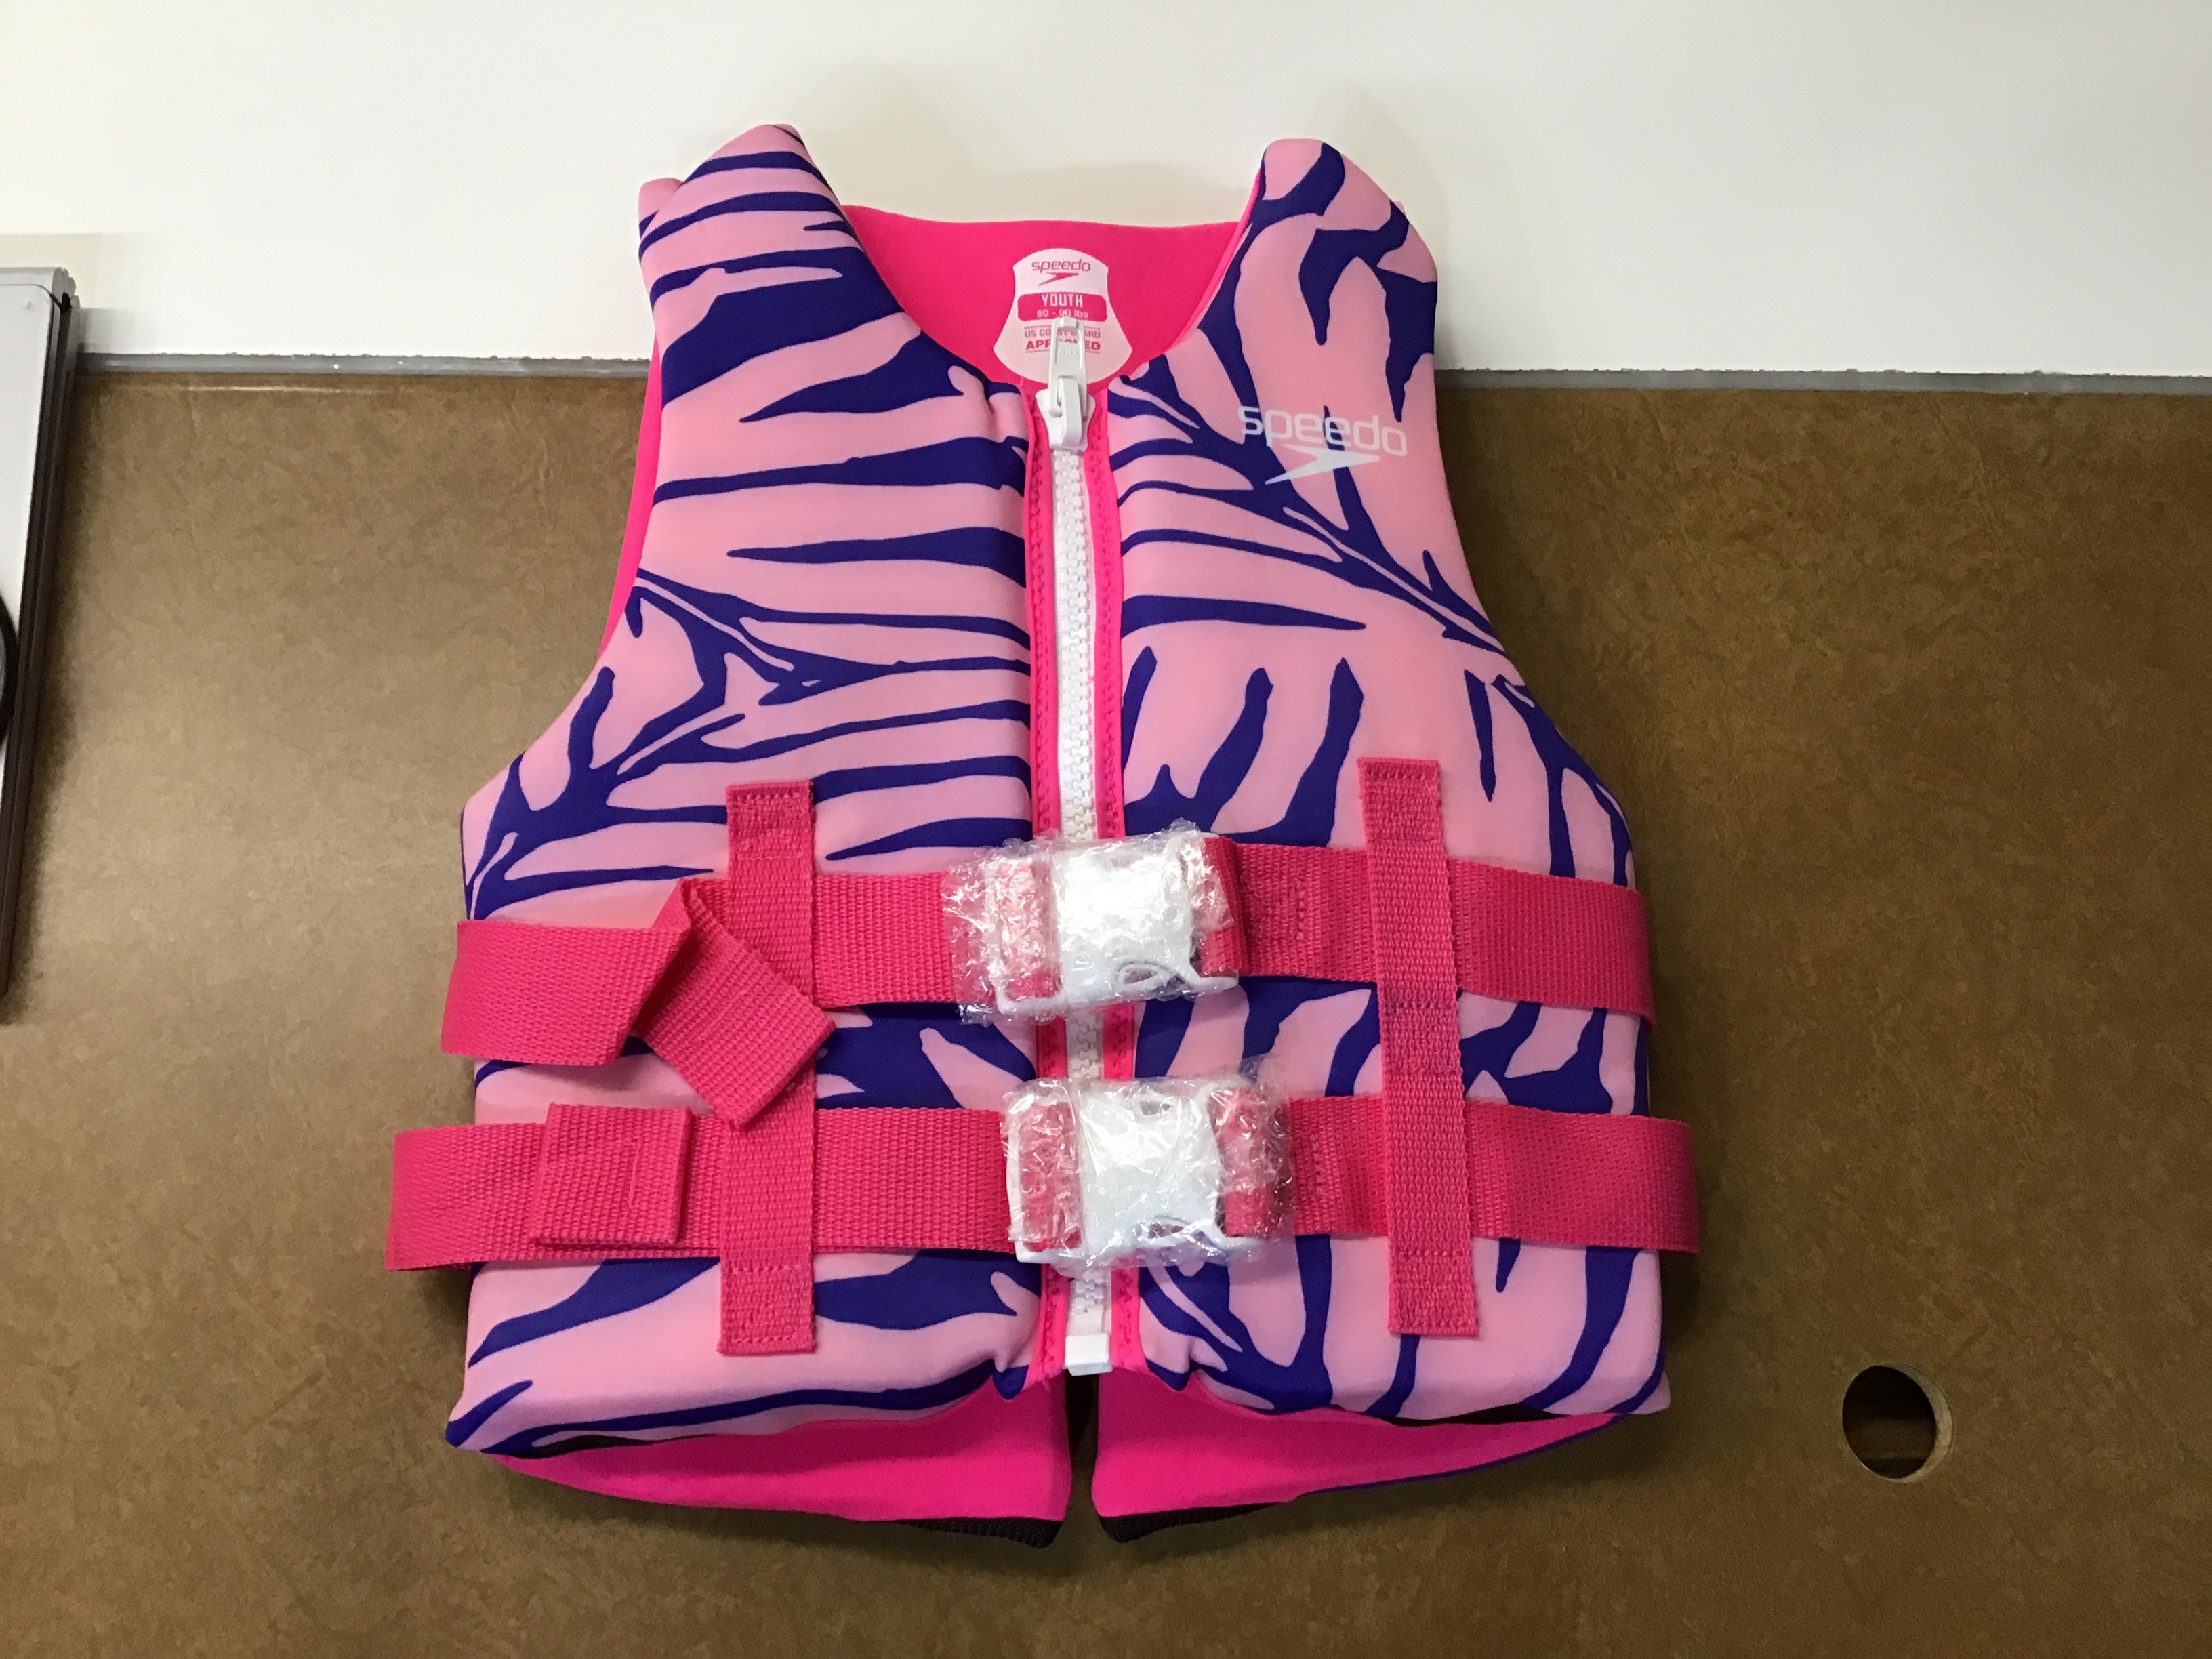 Speedo CB Youth PFD Girls' Life Jacket Vest - Pink Hawaii | eBay